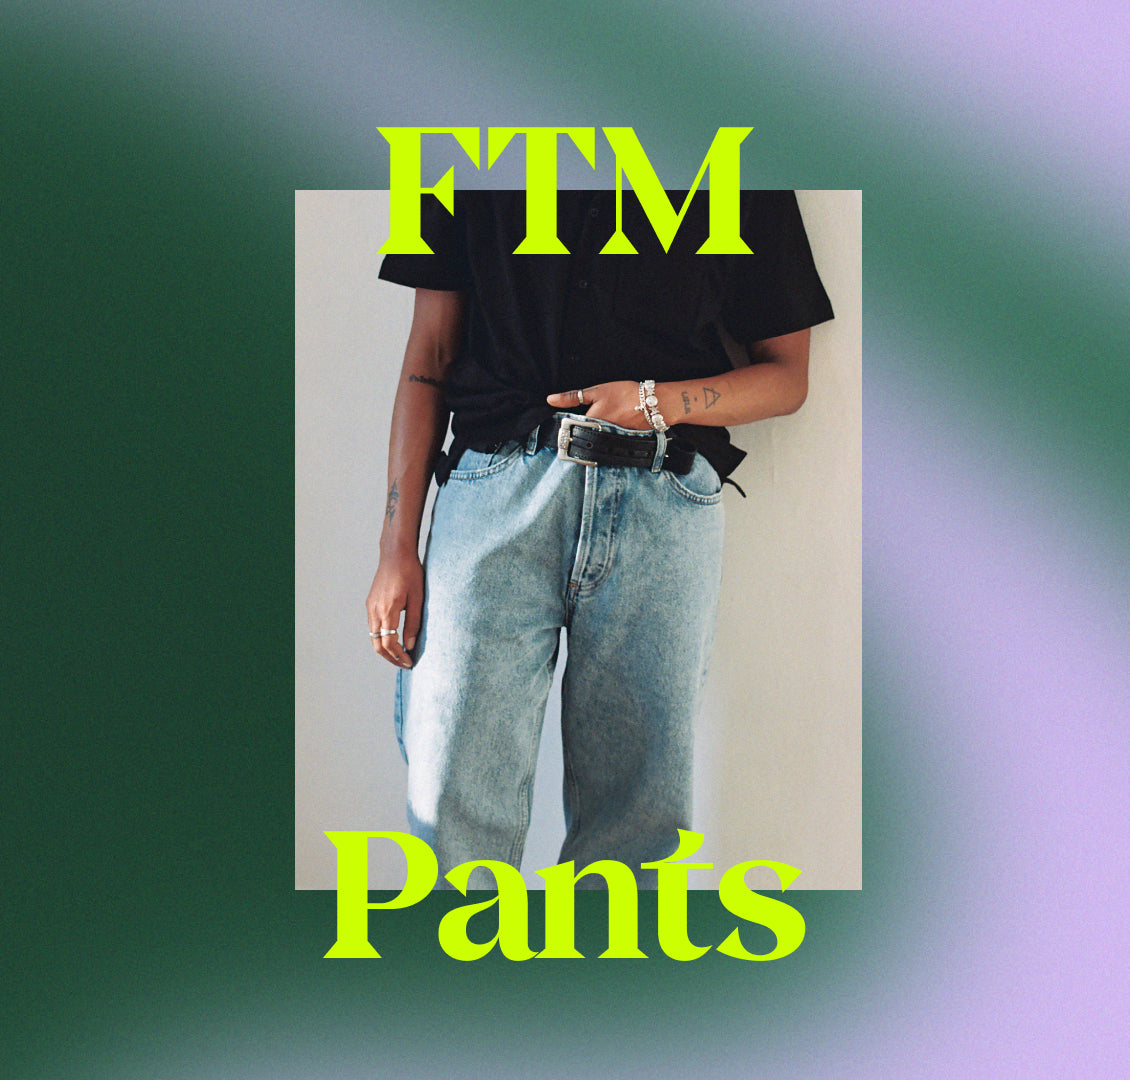 FTM Pants